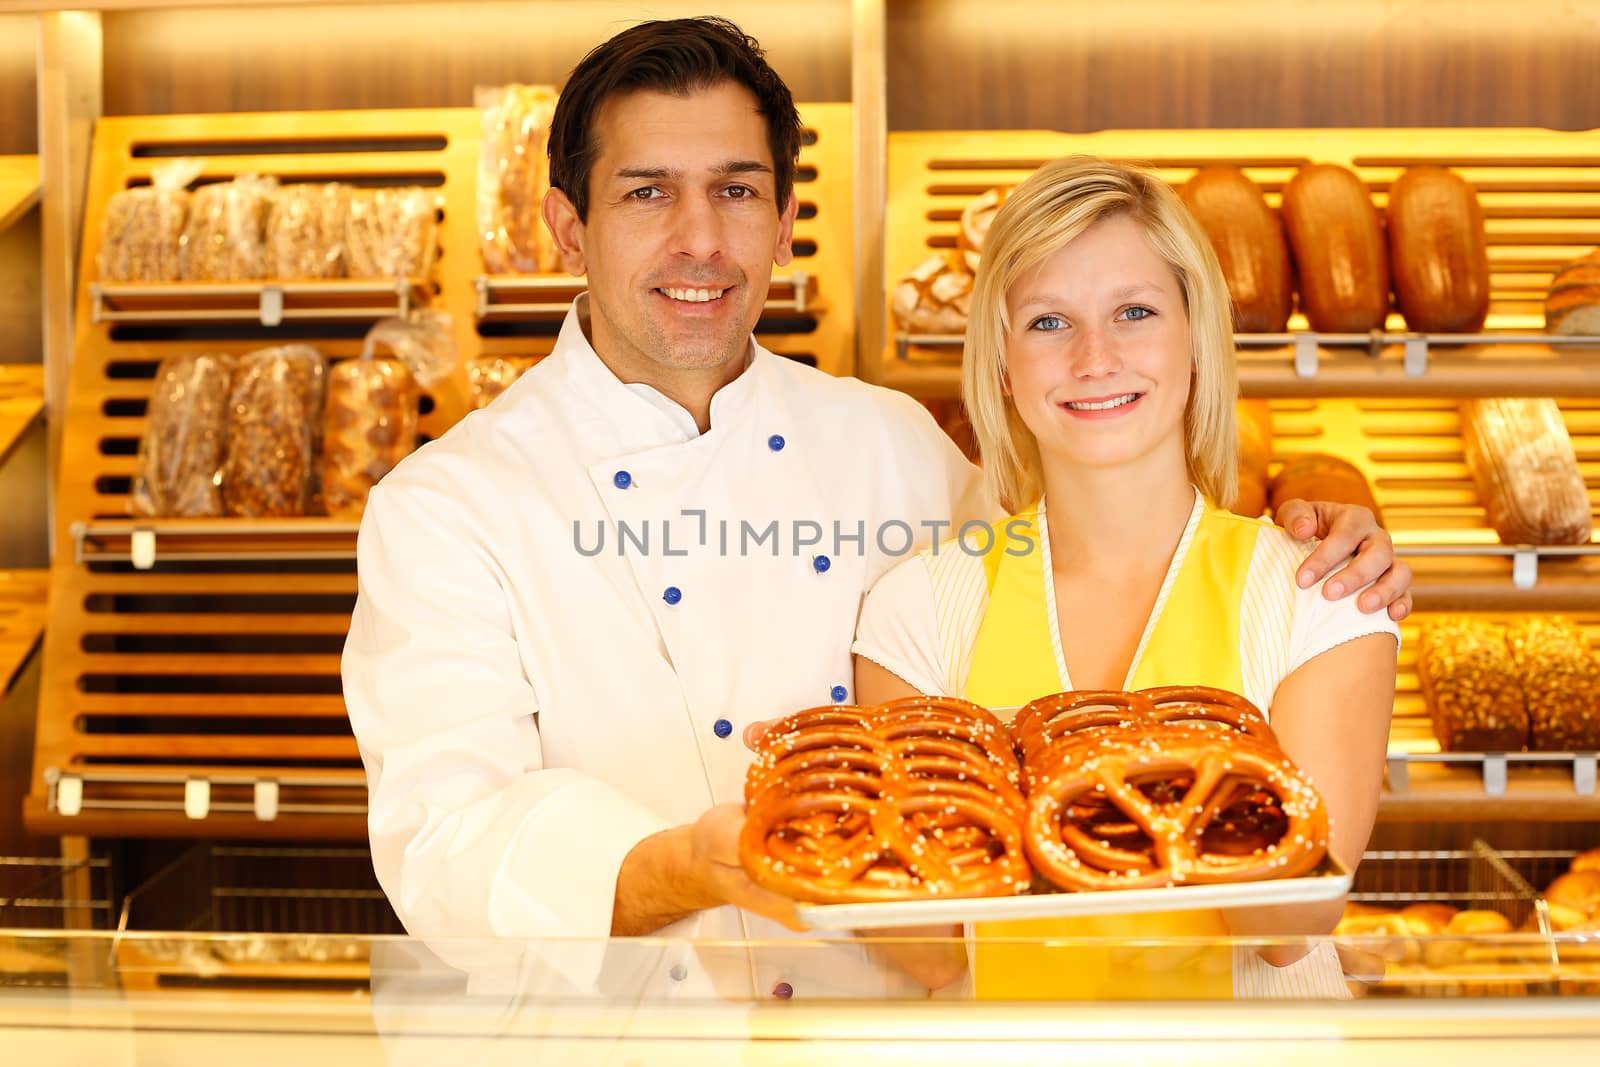 Shopkeeper and baker in Bakery or baker's shop present a tablet full of pretzels